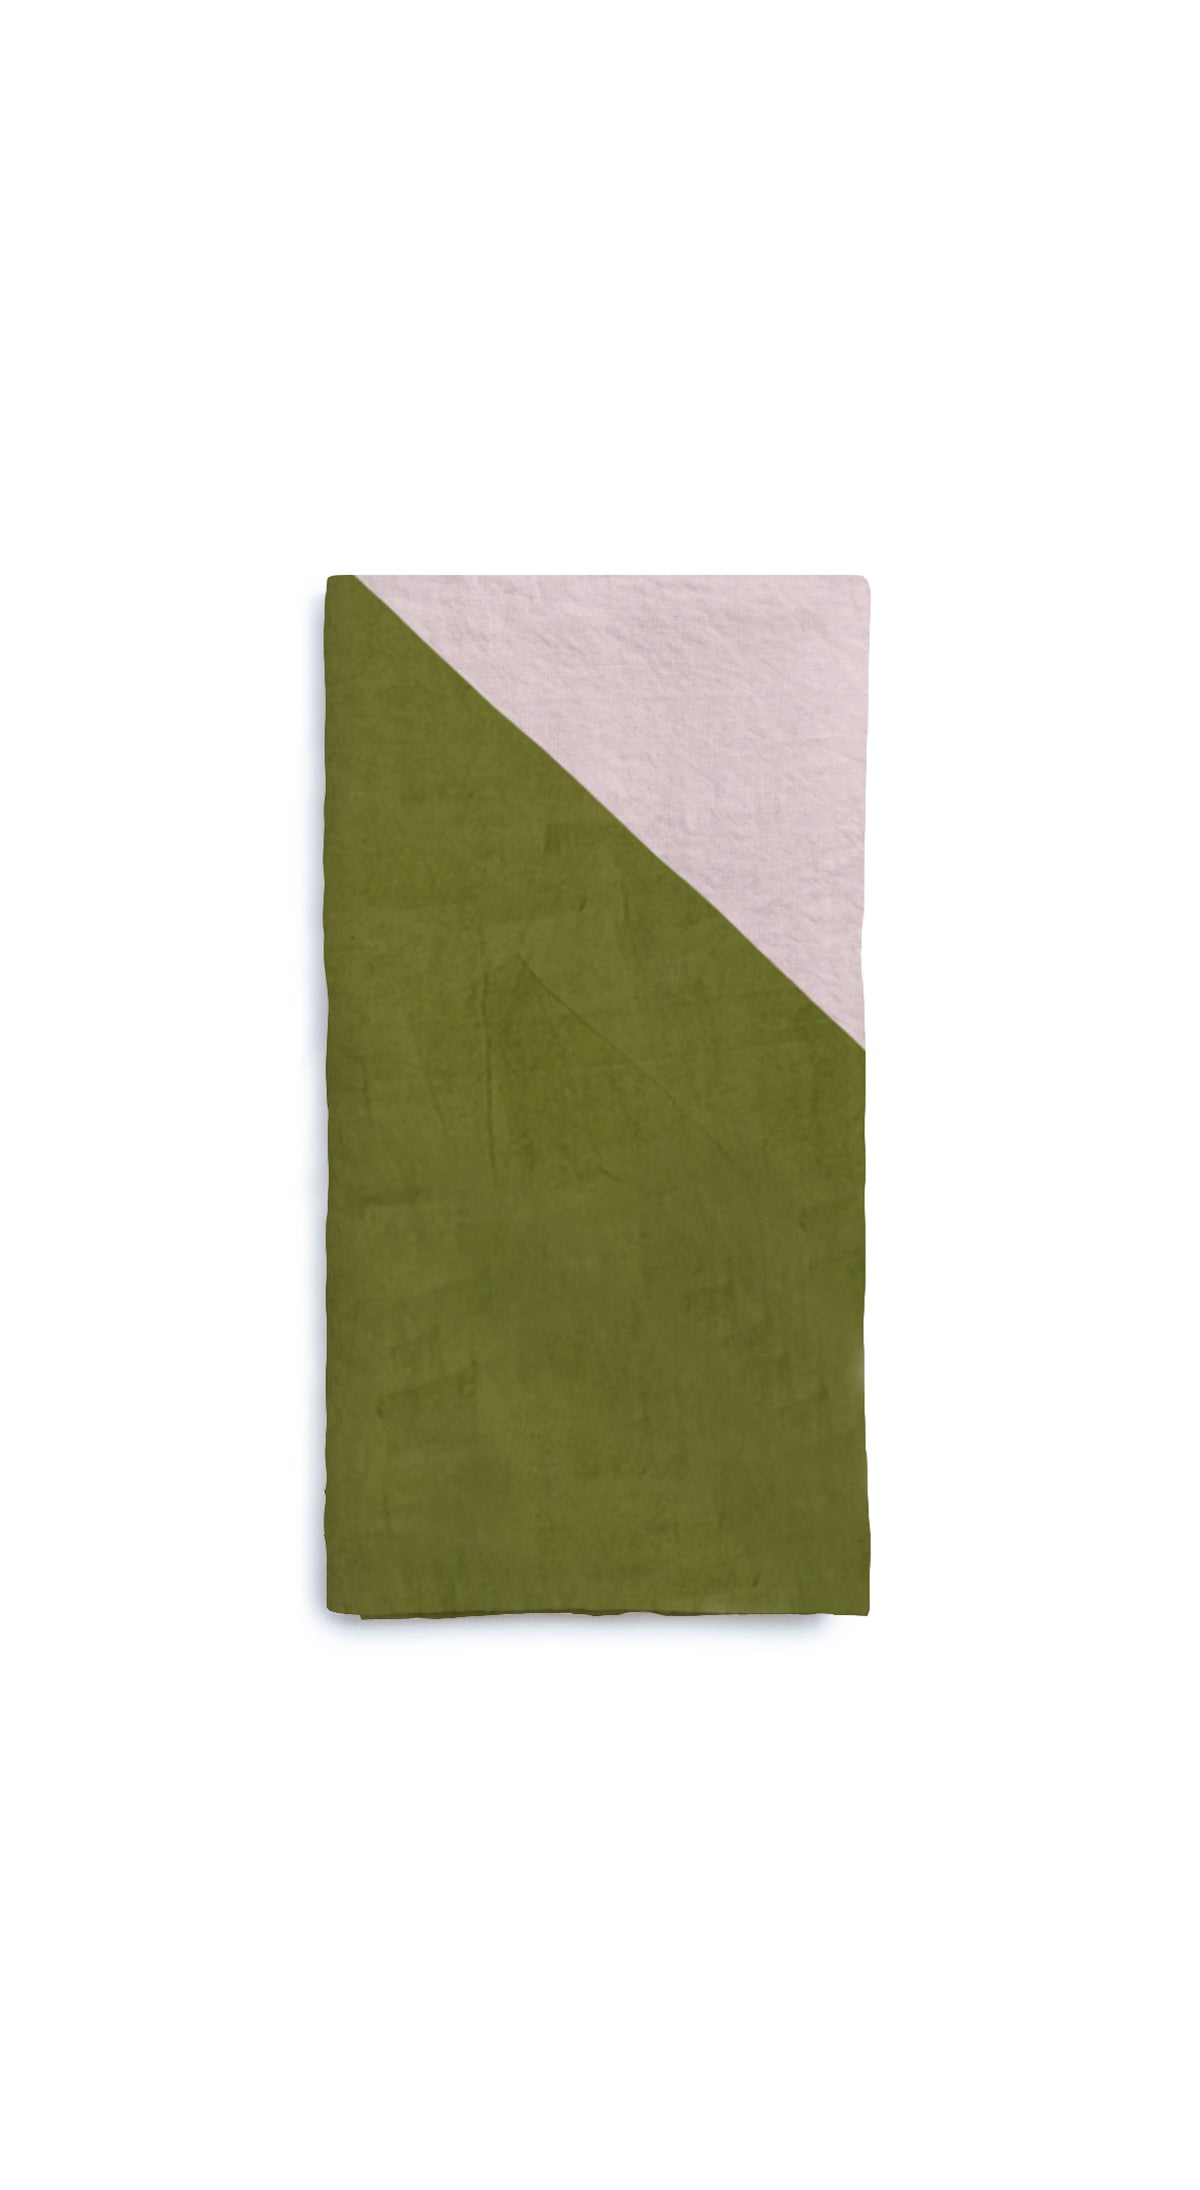 Stripe Linen Napkin in Avocado Green and Pale Pink, 50x50cm